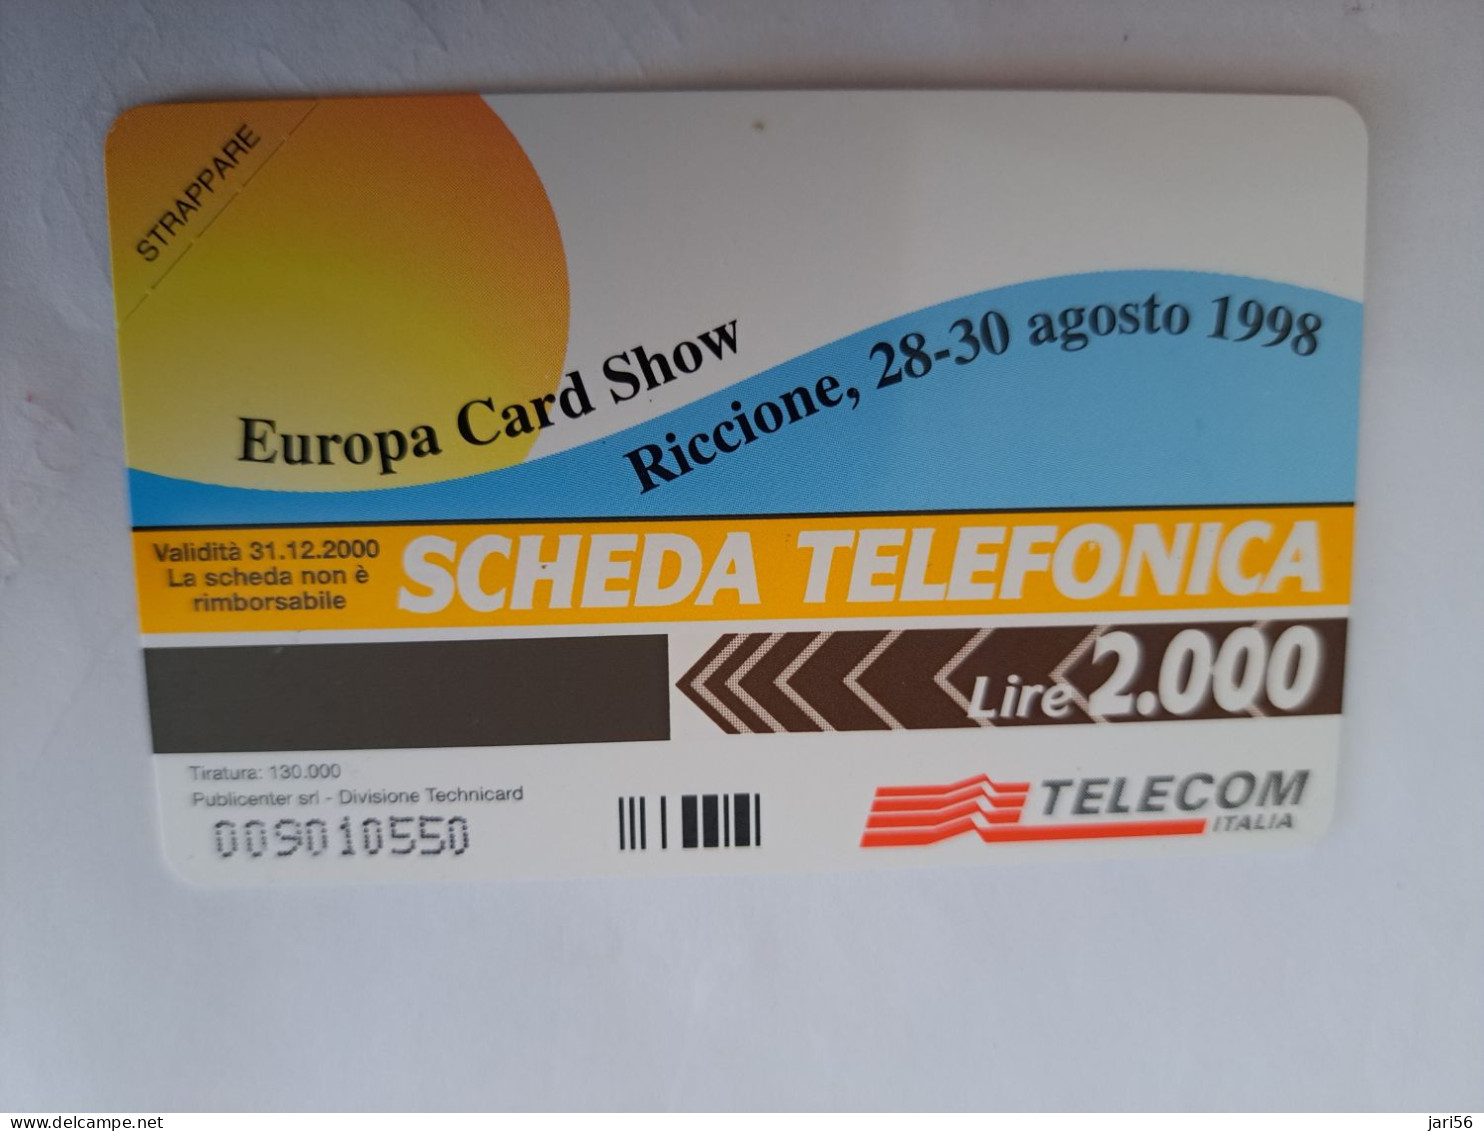 ITALIA LIRE 2000 / EUROPA CARD SHOW/ RICCIONE 1998    / PREPAID  MINT  ** 14240 ** - Publiques Ordinaires